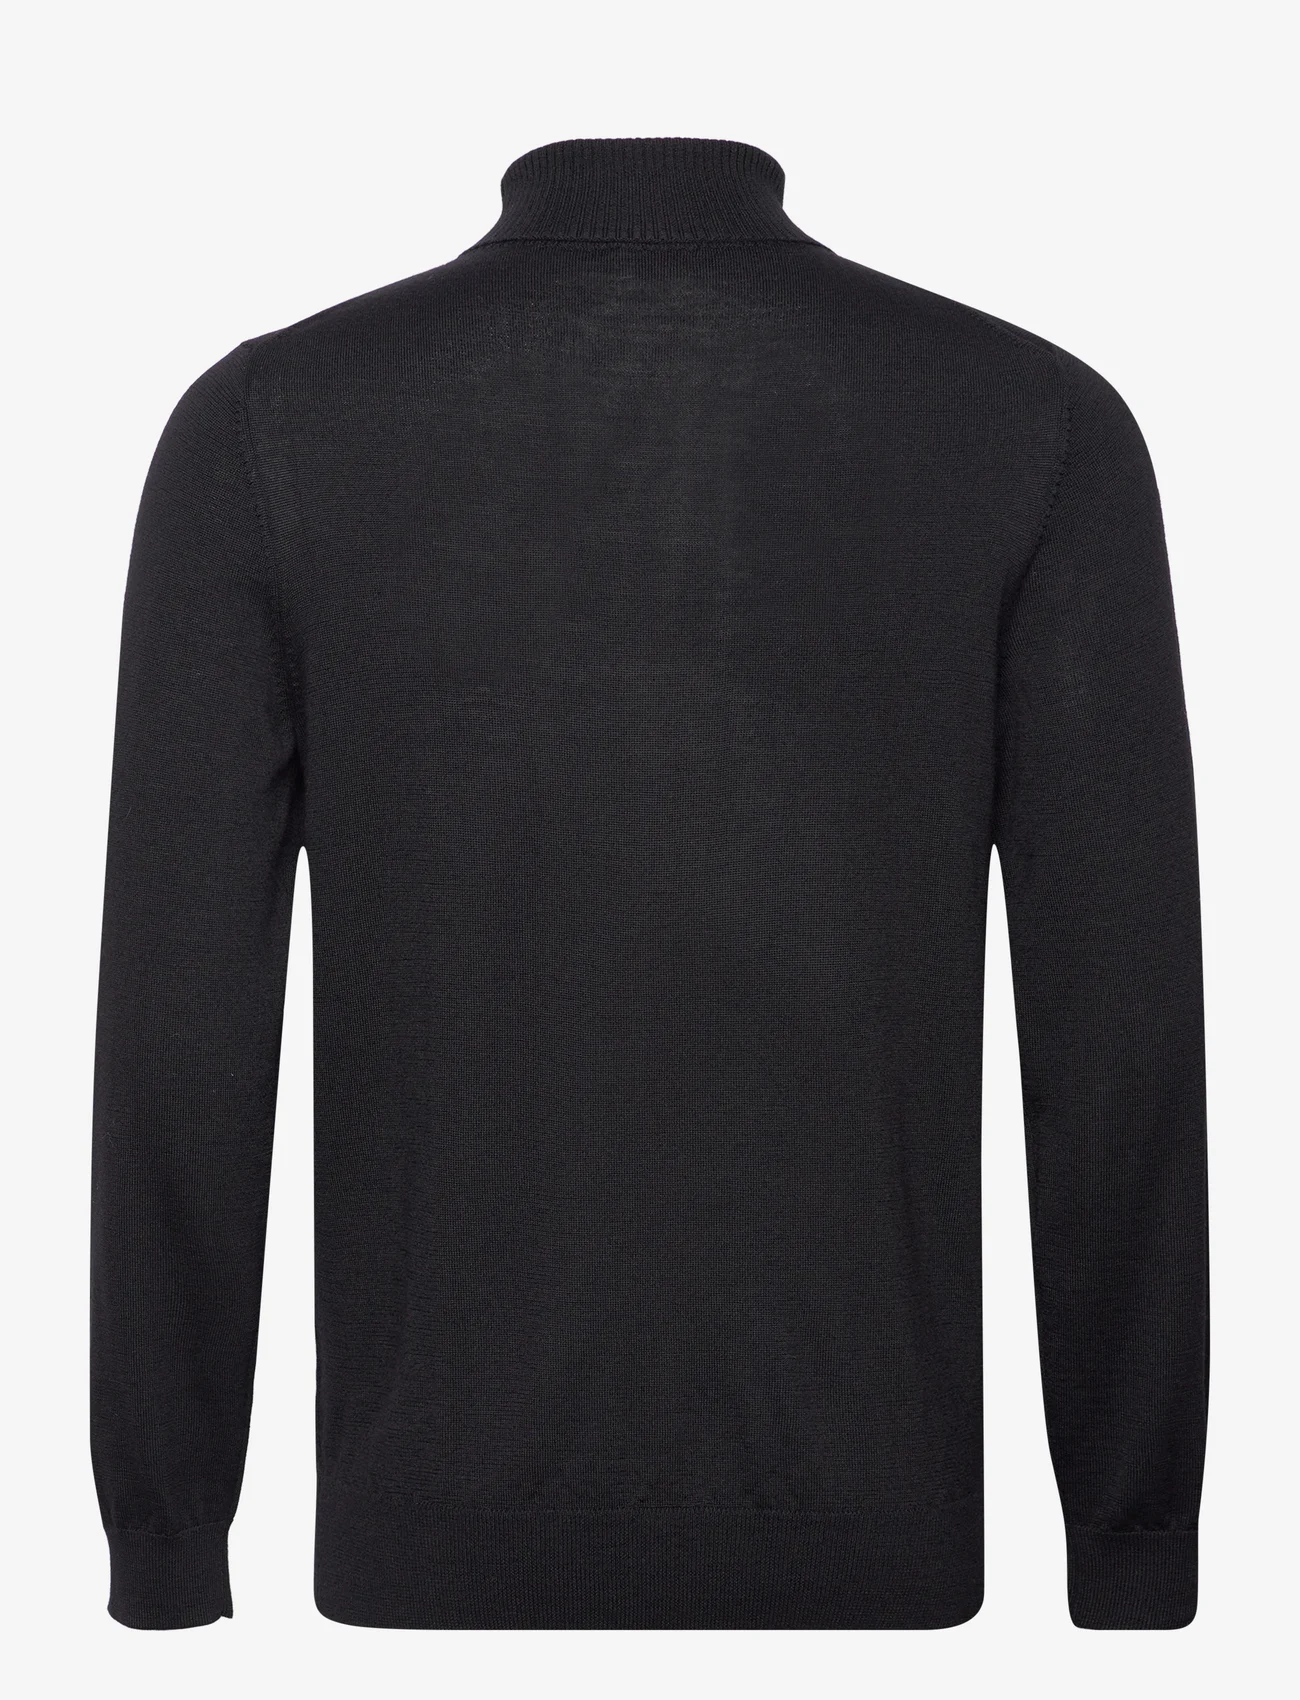 Filippa K - Merino Turtleneck Sweater - truien met col haag - black - 1